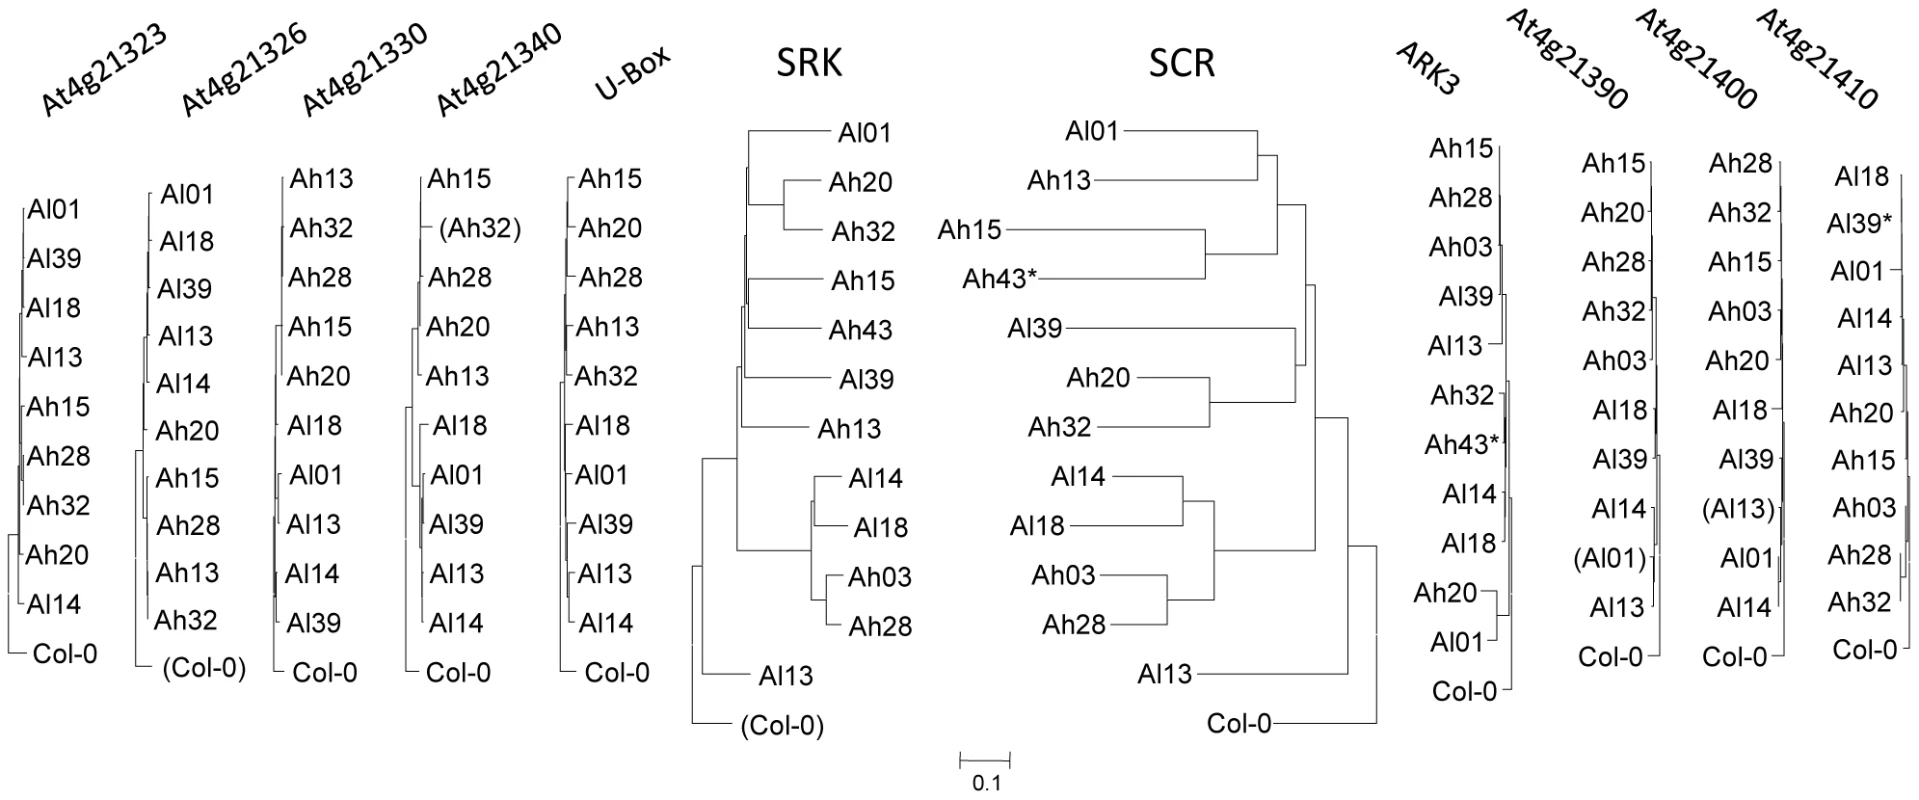 Gene phylogenies in and around the S-locus region.